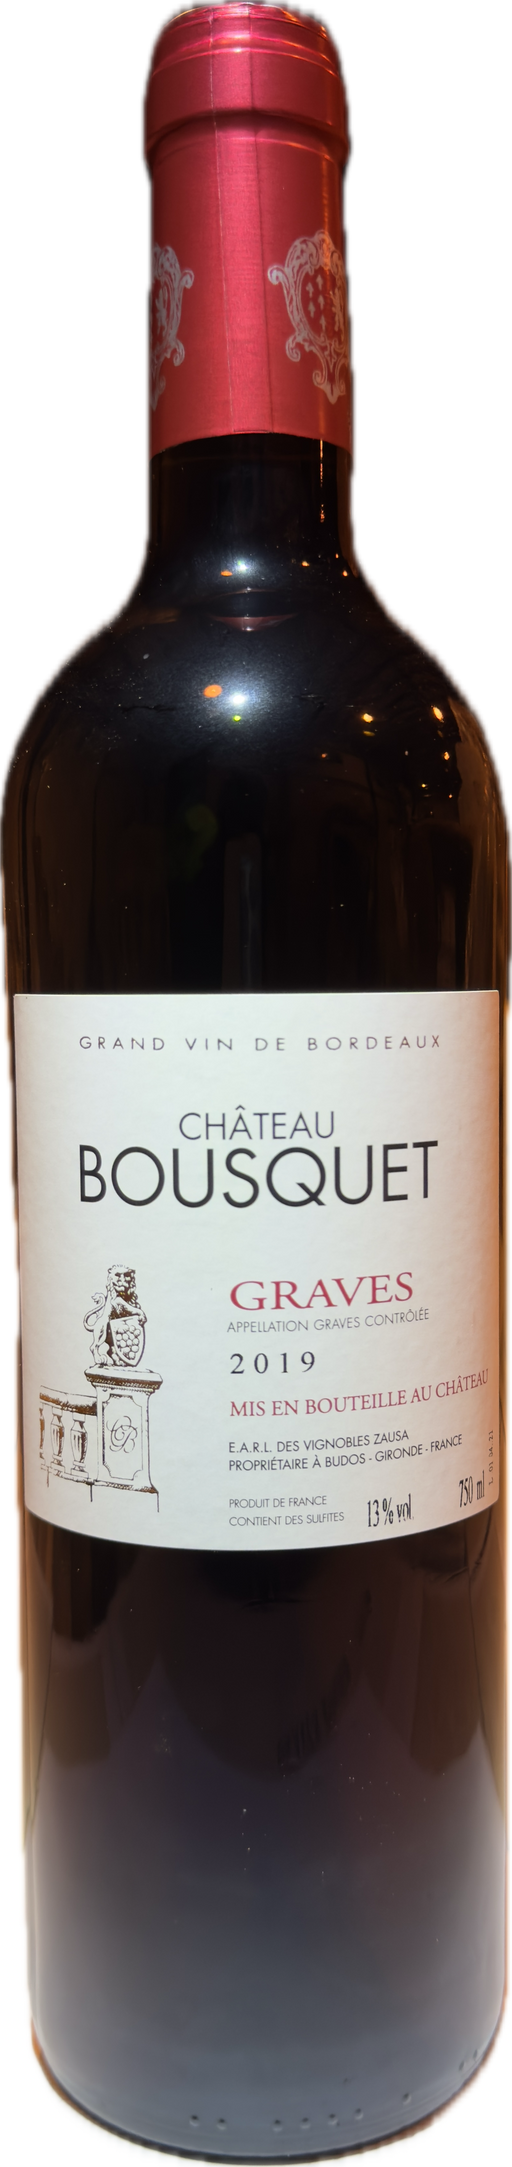 Ch. bousquet Graves red 2019